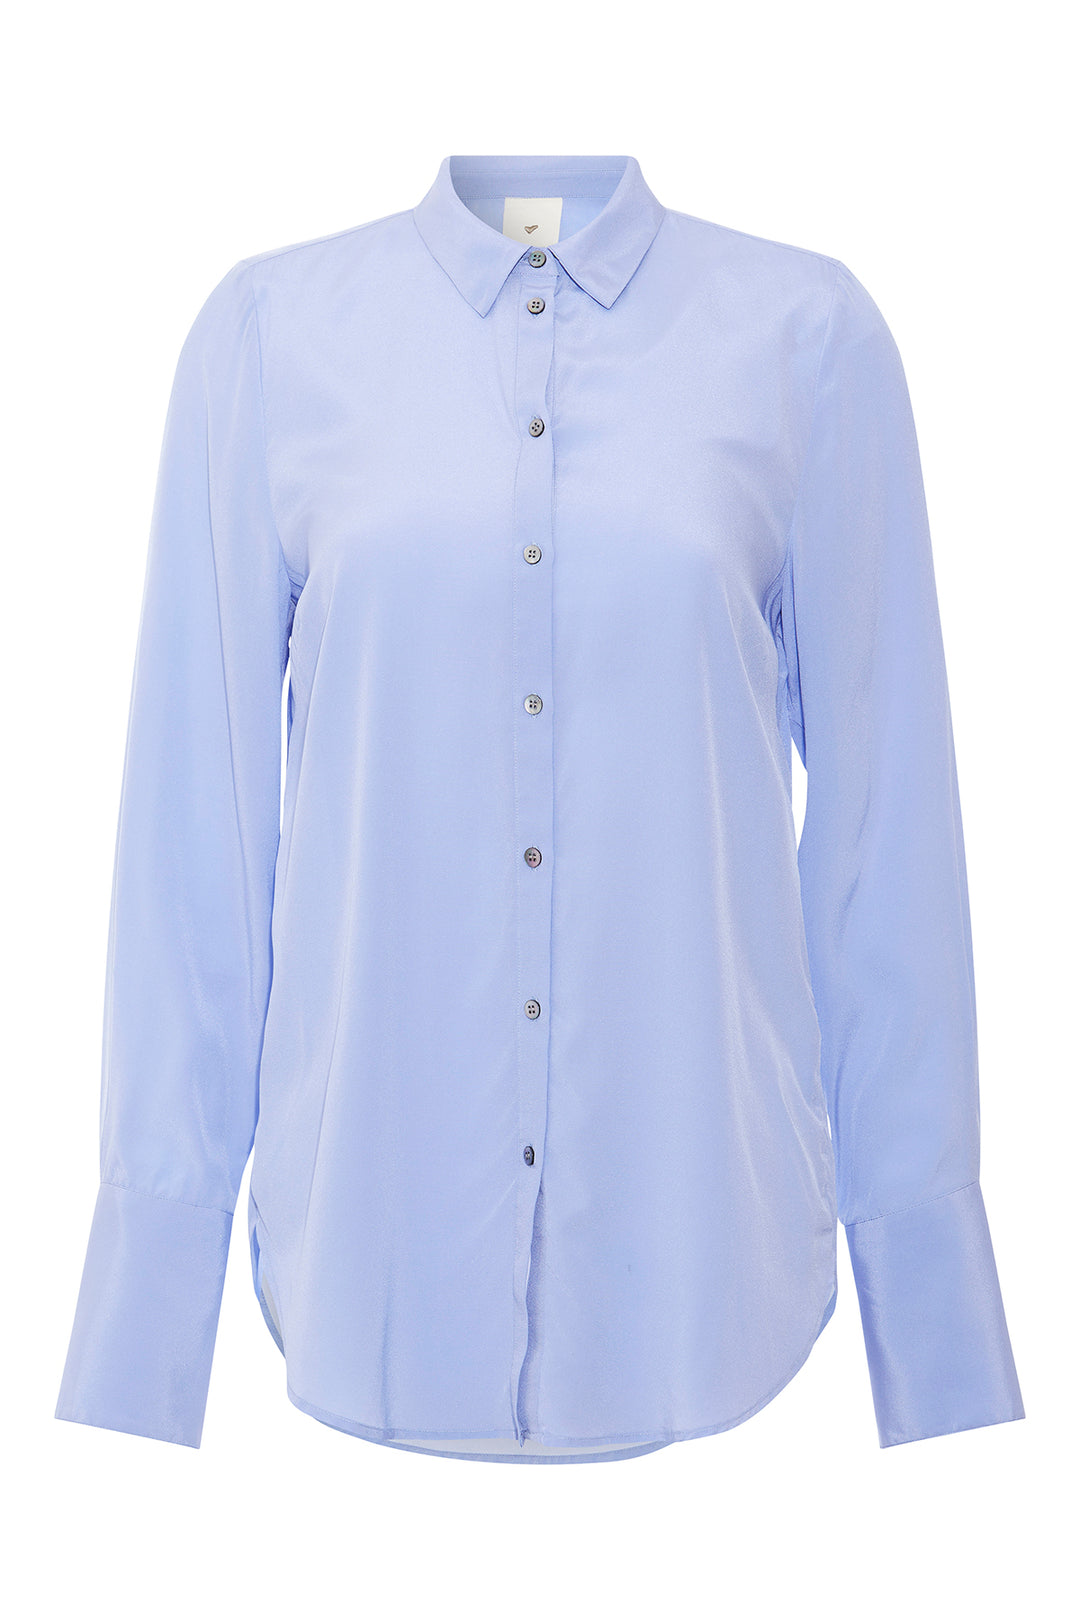 Heartmade Miri skjorte SHIRTS 277 Cornflower blue